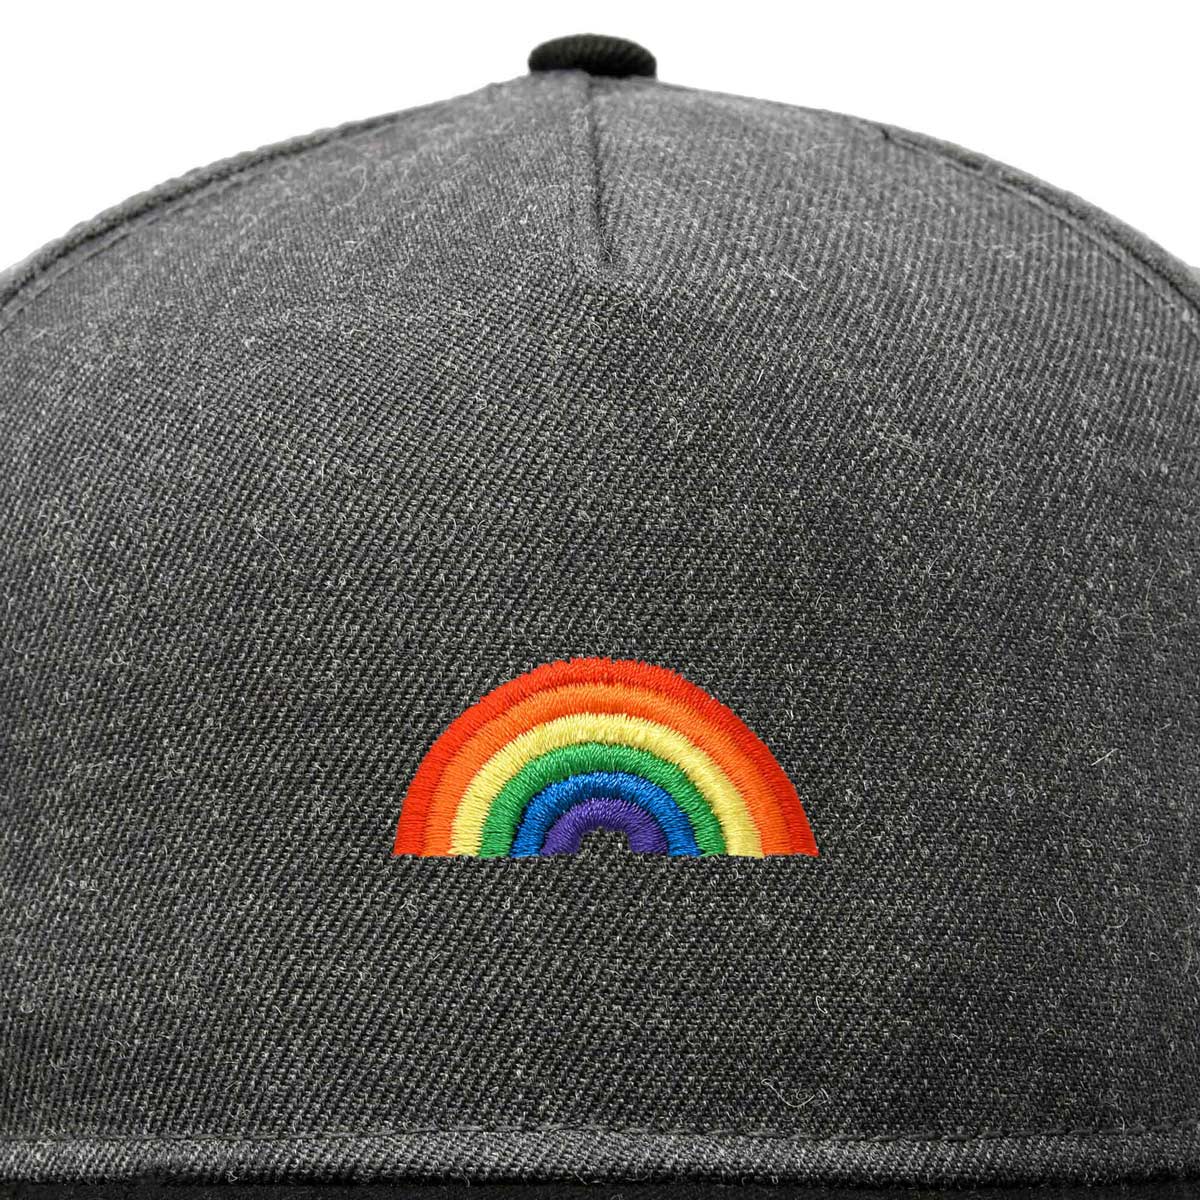 Dalix Rainbow Snapback Flat Bill Baseball Hat Embroidered Cap Mens in Black Dark Gray